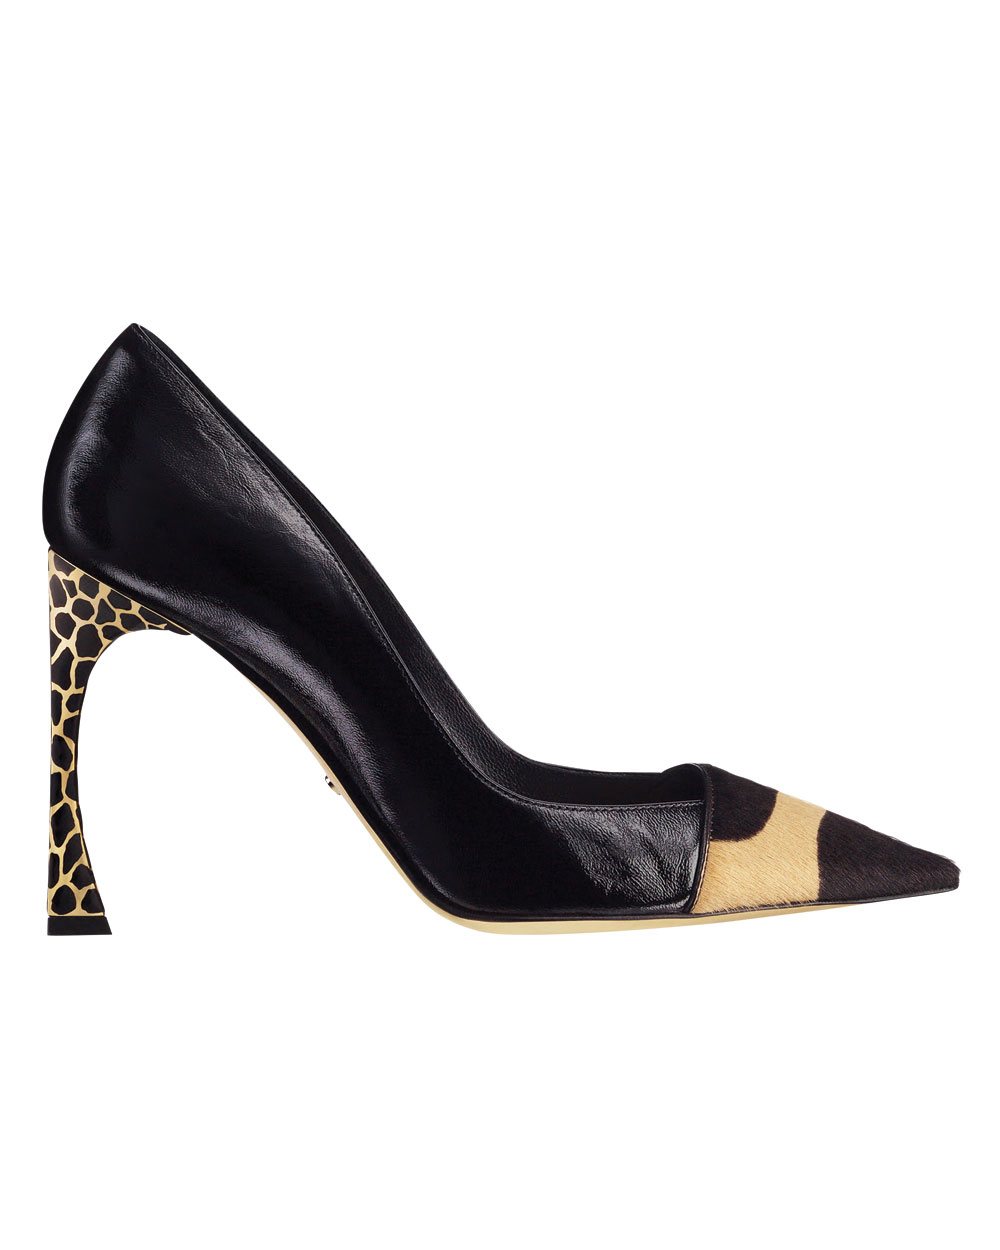 Christian Dior heels, $1900